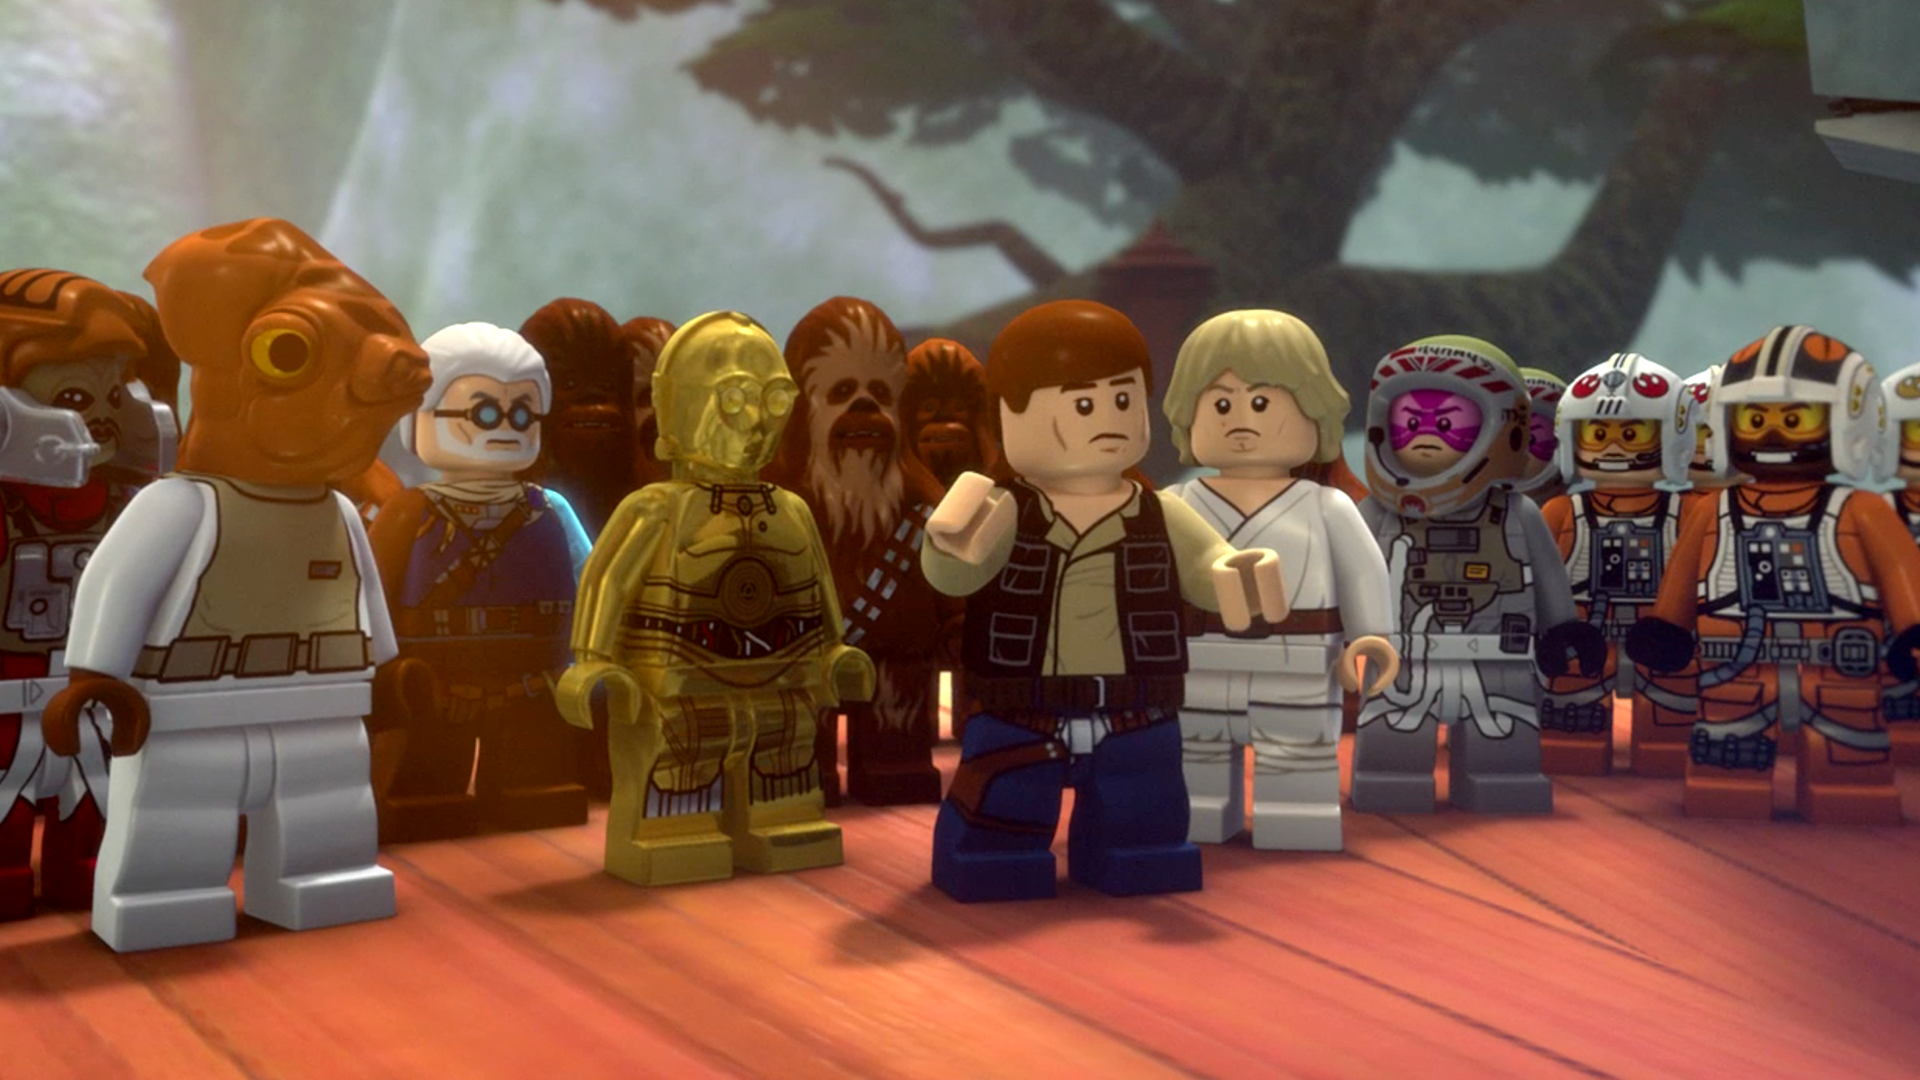 LEGO Star Wars : Les Chroniques de Yoda - L'attaque de Coruscant